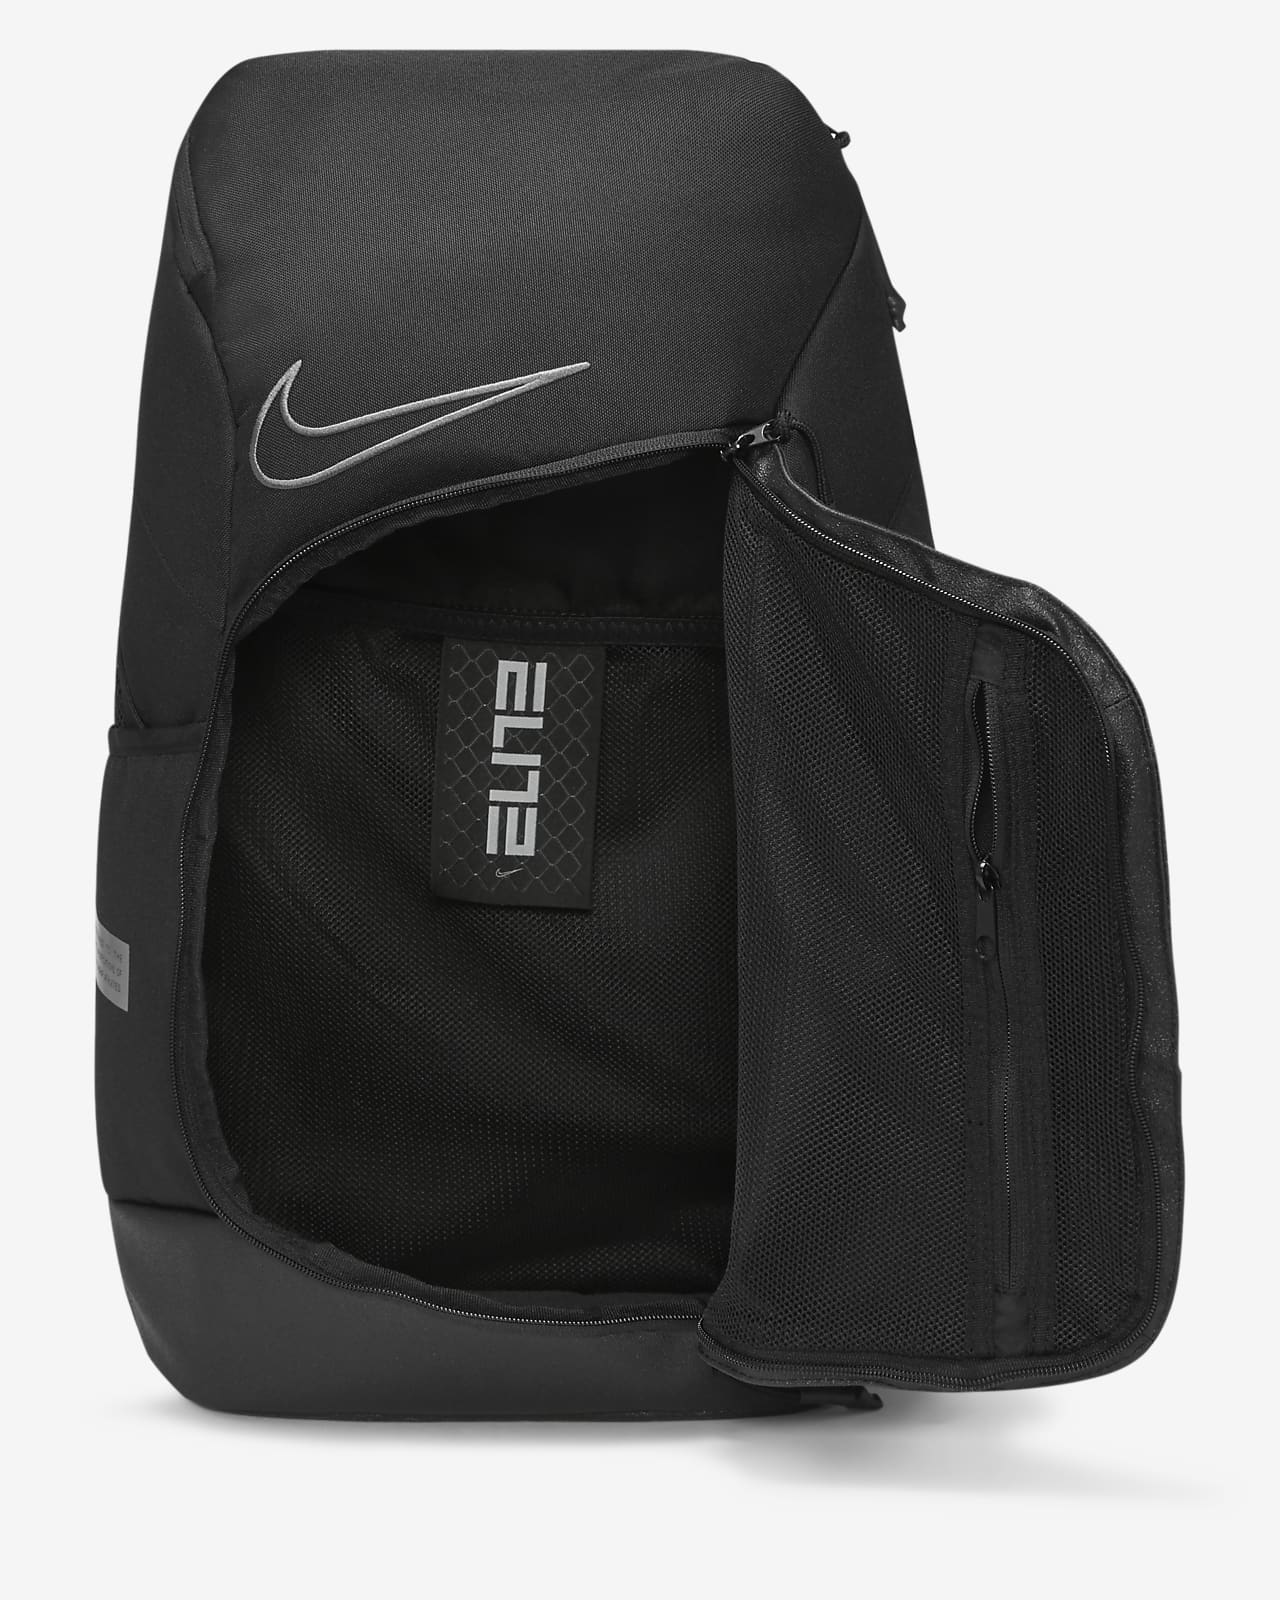 Validación heroína residuo Nike Elite Pro Basketball Backpack (32L). Nike.com